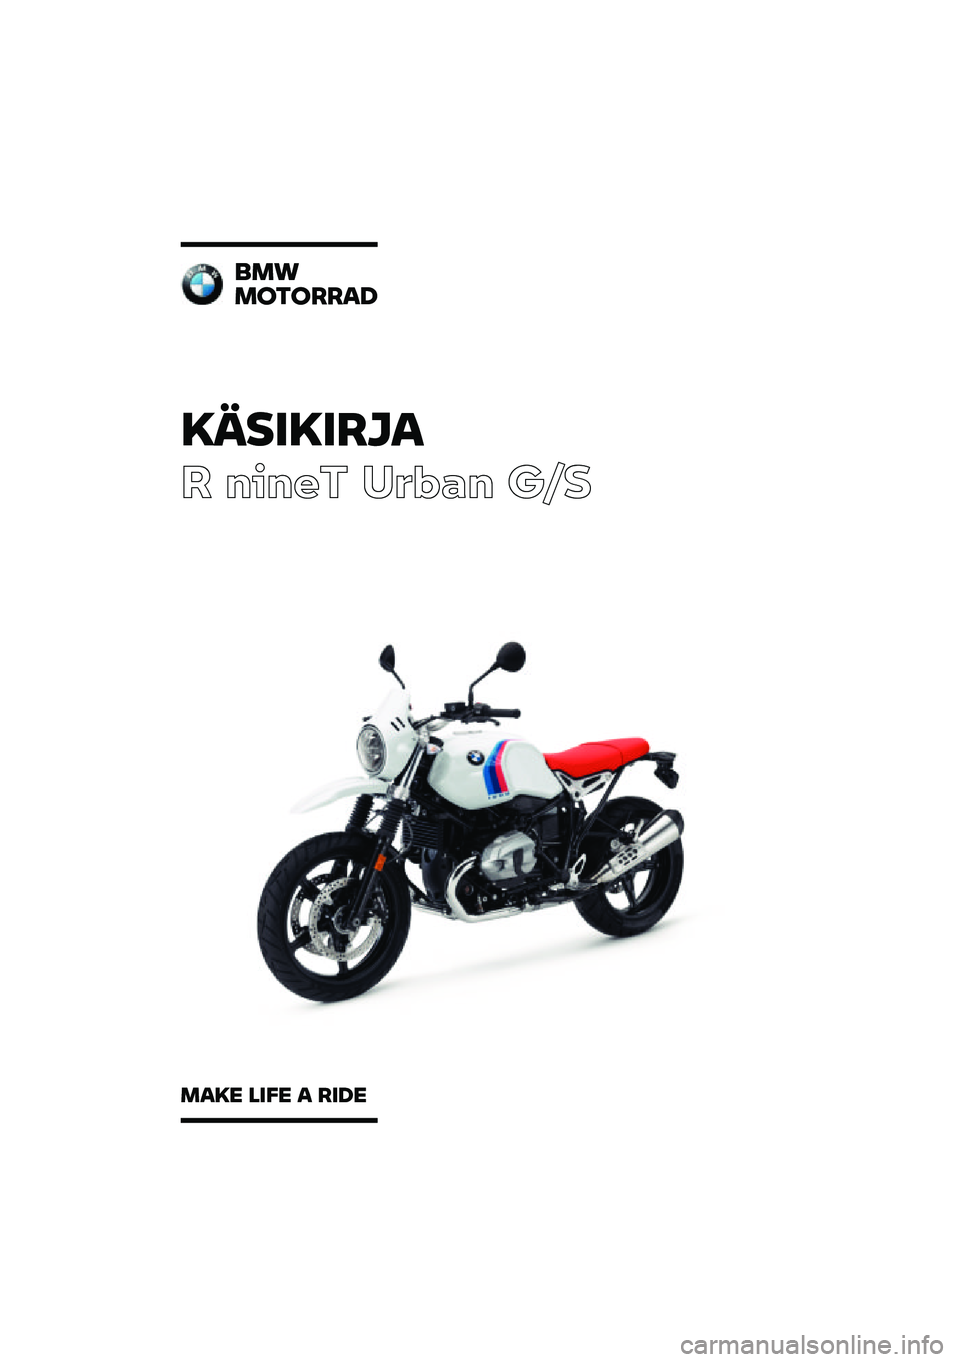 BMW MOTORRAD R NINE T URVAN G/S 2020  Käsikirja (in Finnish) �������\b�	�
� ����� ��\b�	�
� ��\f�
�
��\f
��
��
�\b�\b��
���� ���� � �\b��� 